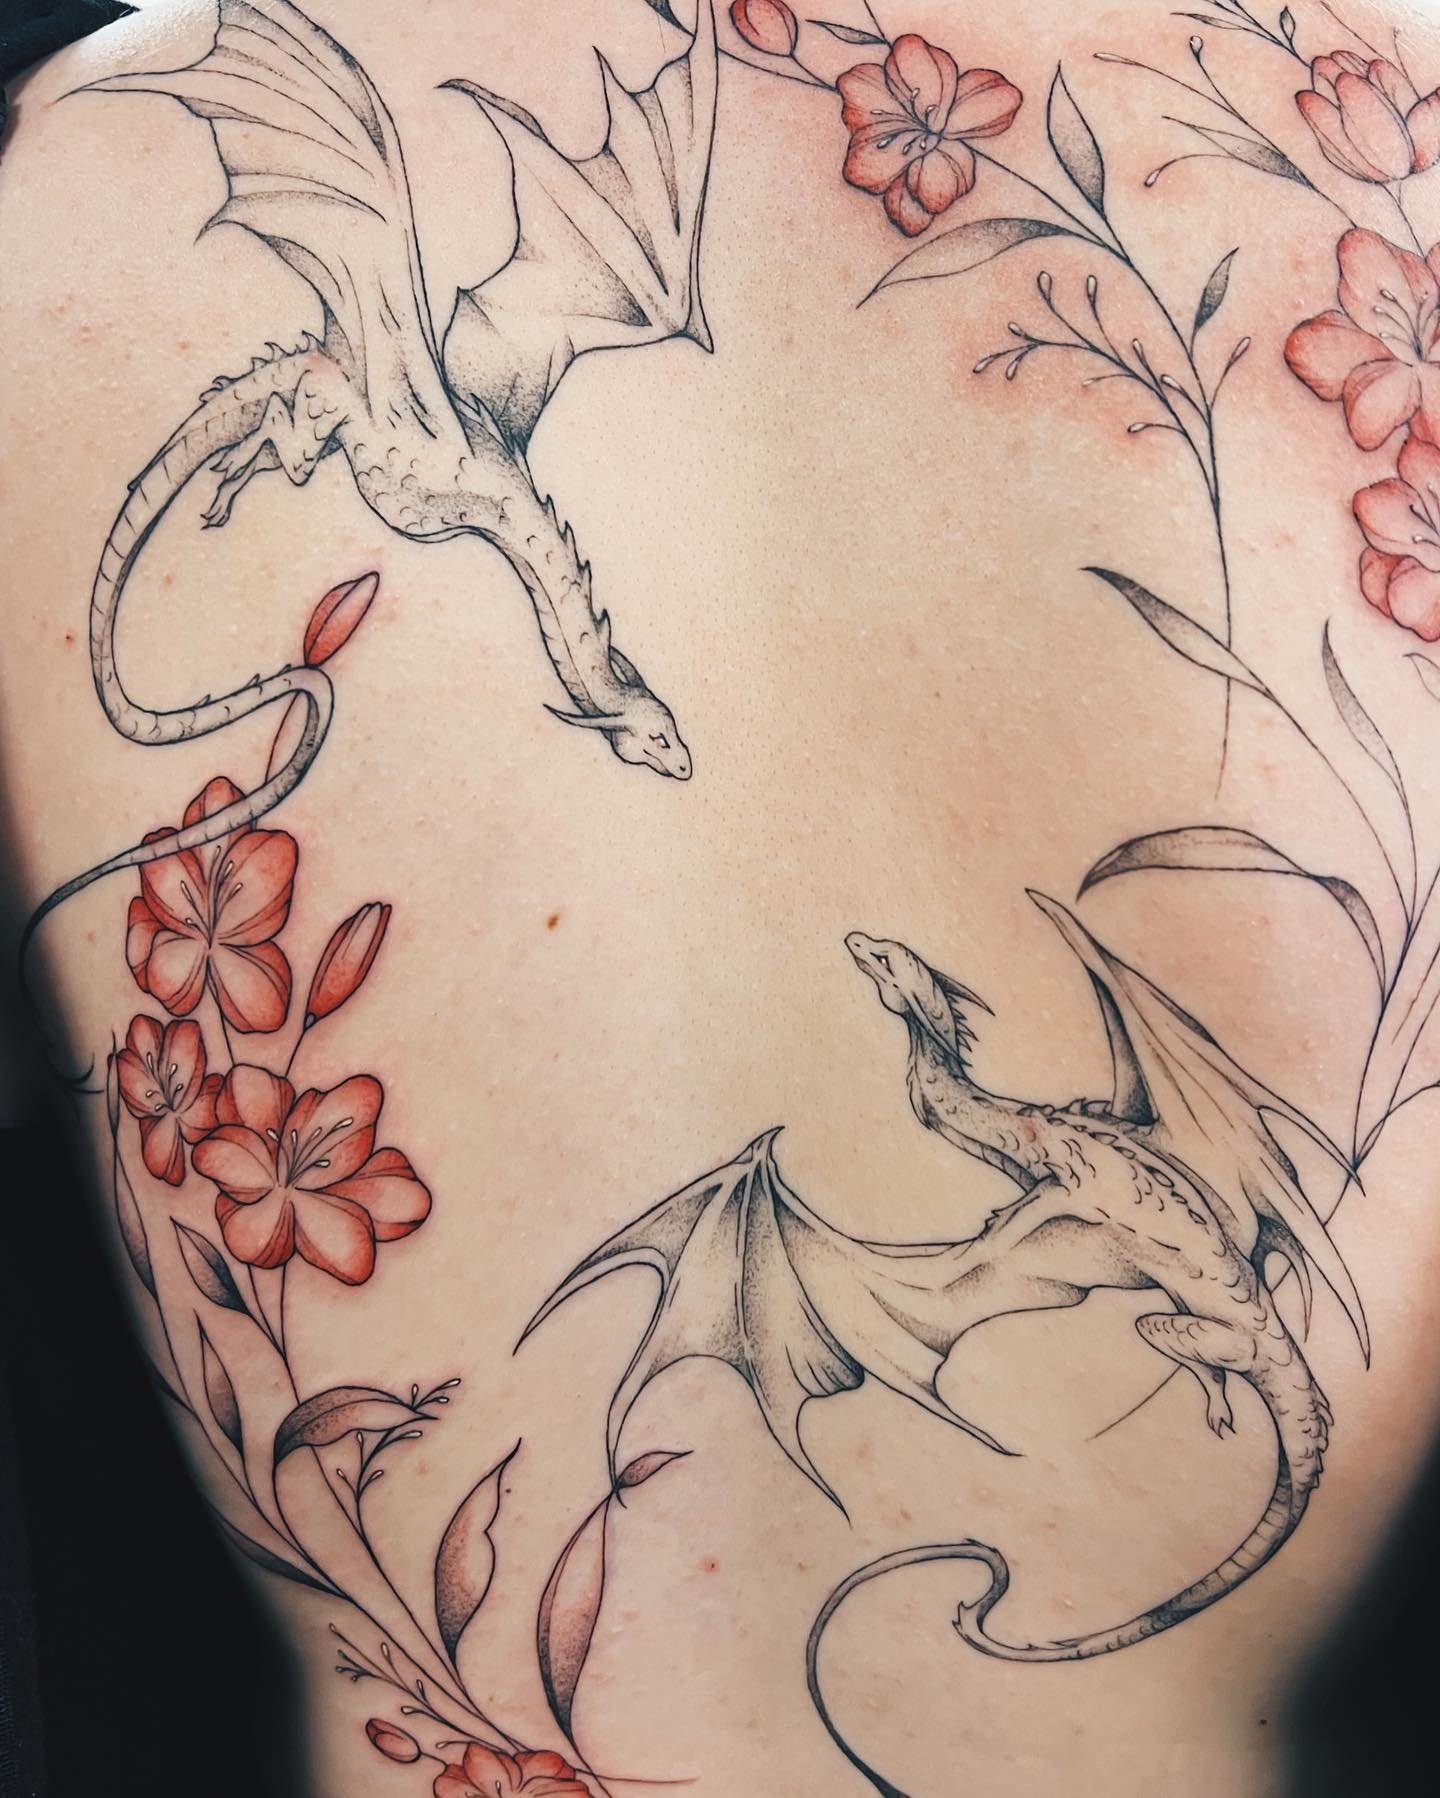 Healed dragons and fresh florals for @asia.chalmers 💗
.
.
.
@timeless_tattoo_company 
#tattoo #tattooideas #tattoos #tattooart #tattooartist #girlswithtattoos #ink #inked #dotwork #dotworktattoo #stippling #blackandgreytattoo #stippletattoo #art #ar